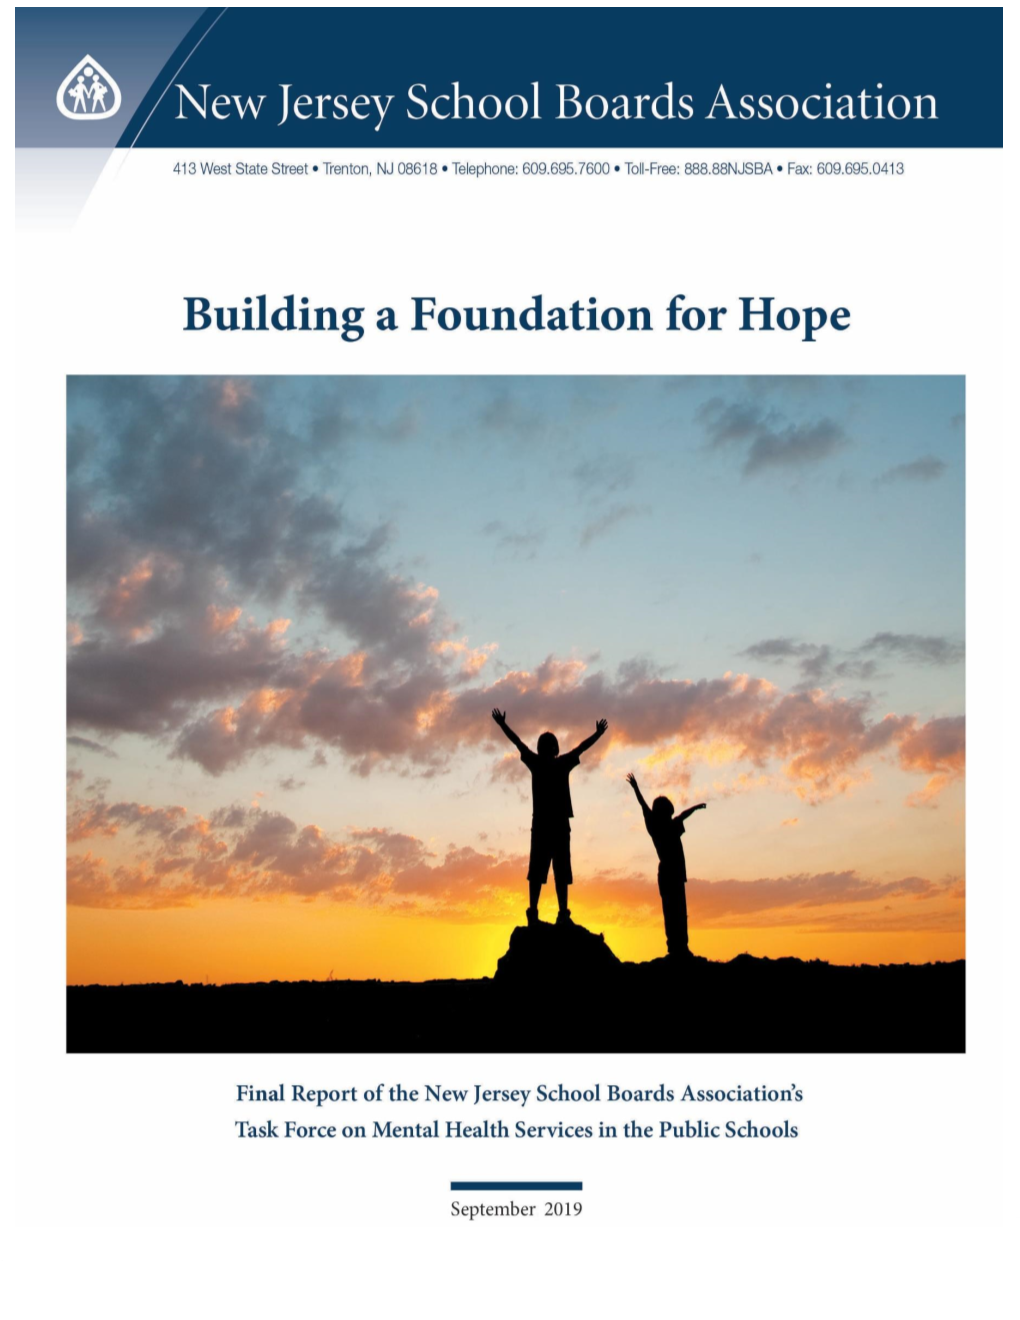 NJSBA Mental Health Task Force Report 2019